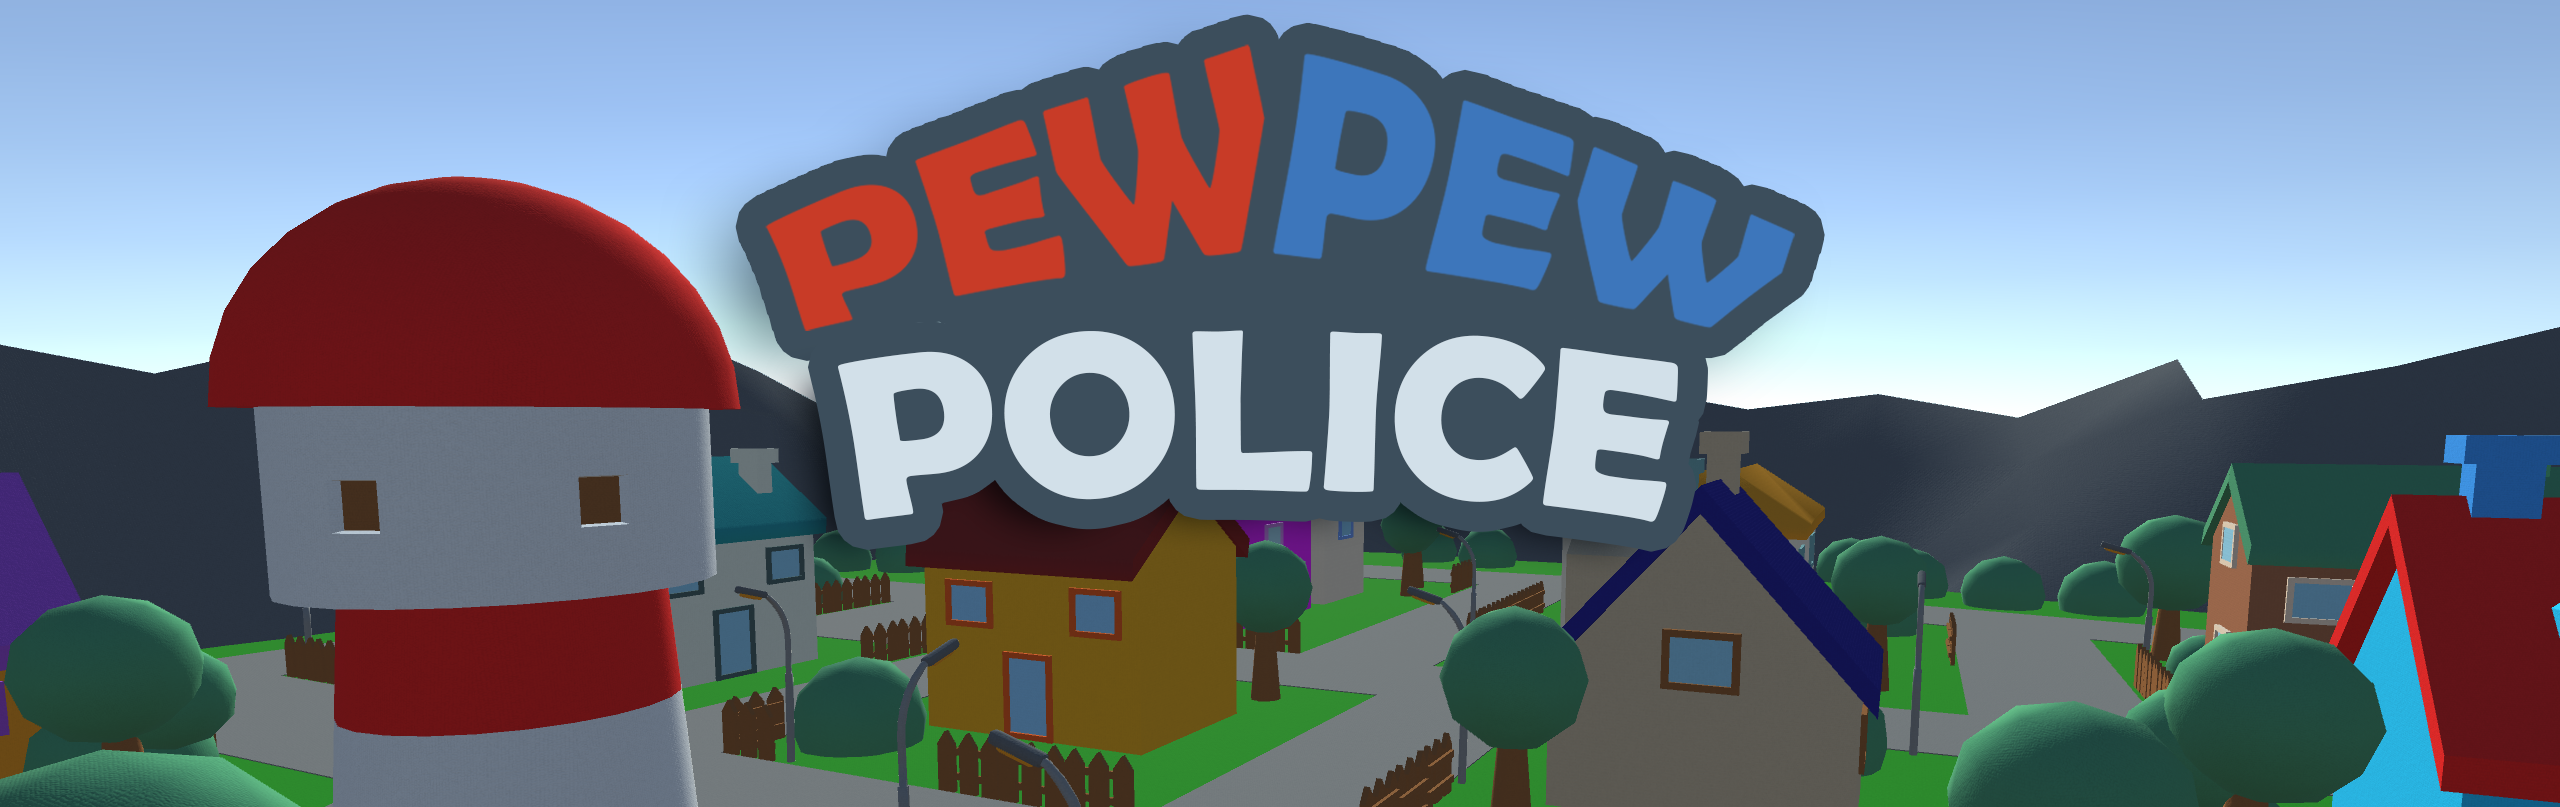 Pew Pew Police